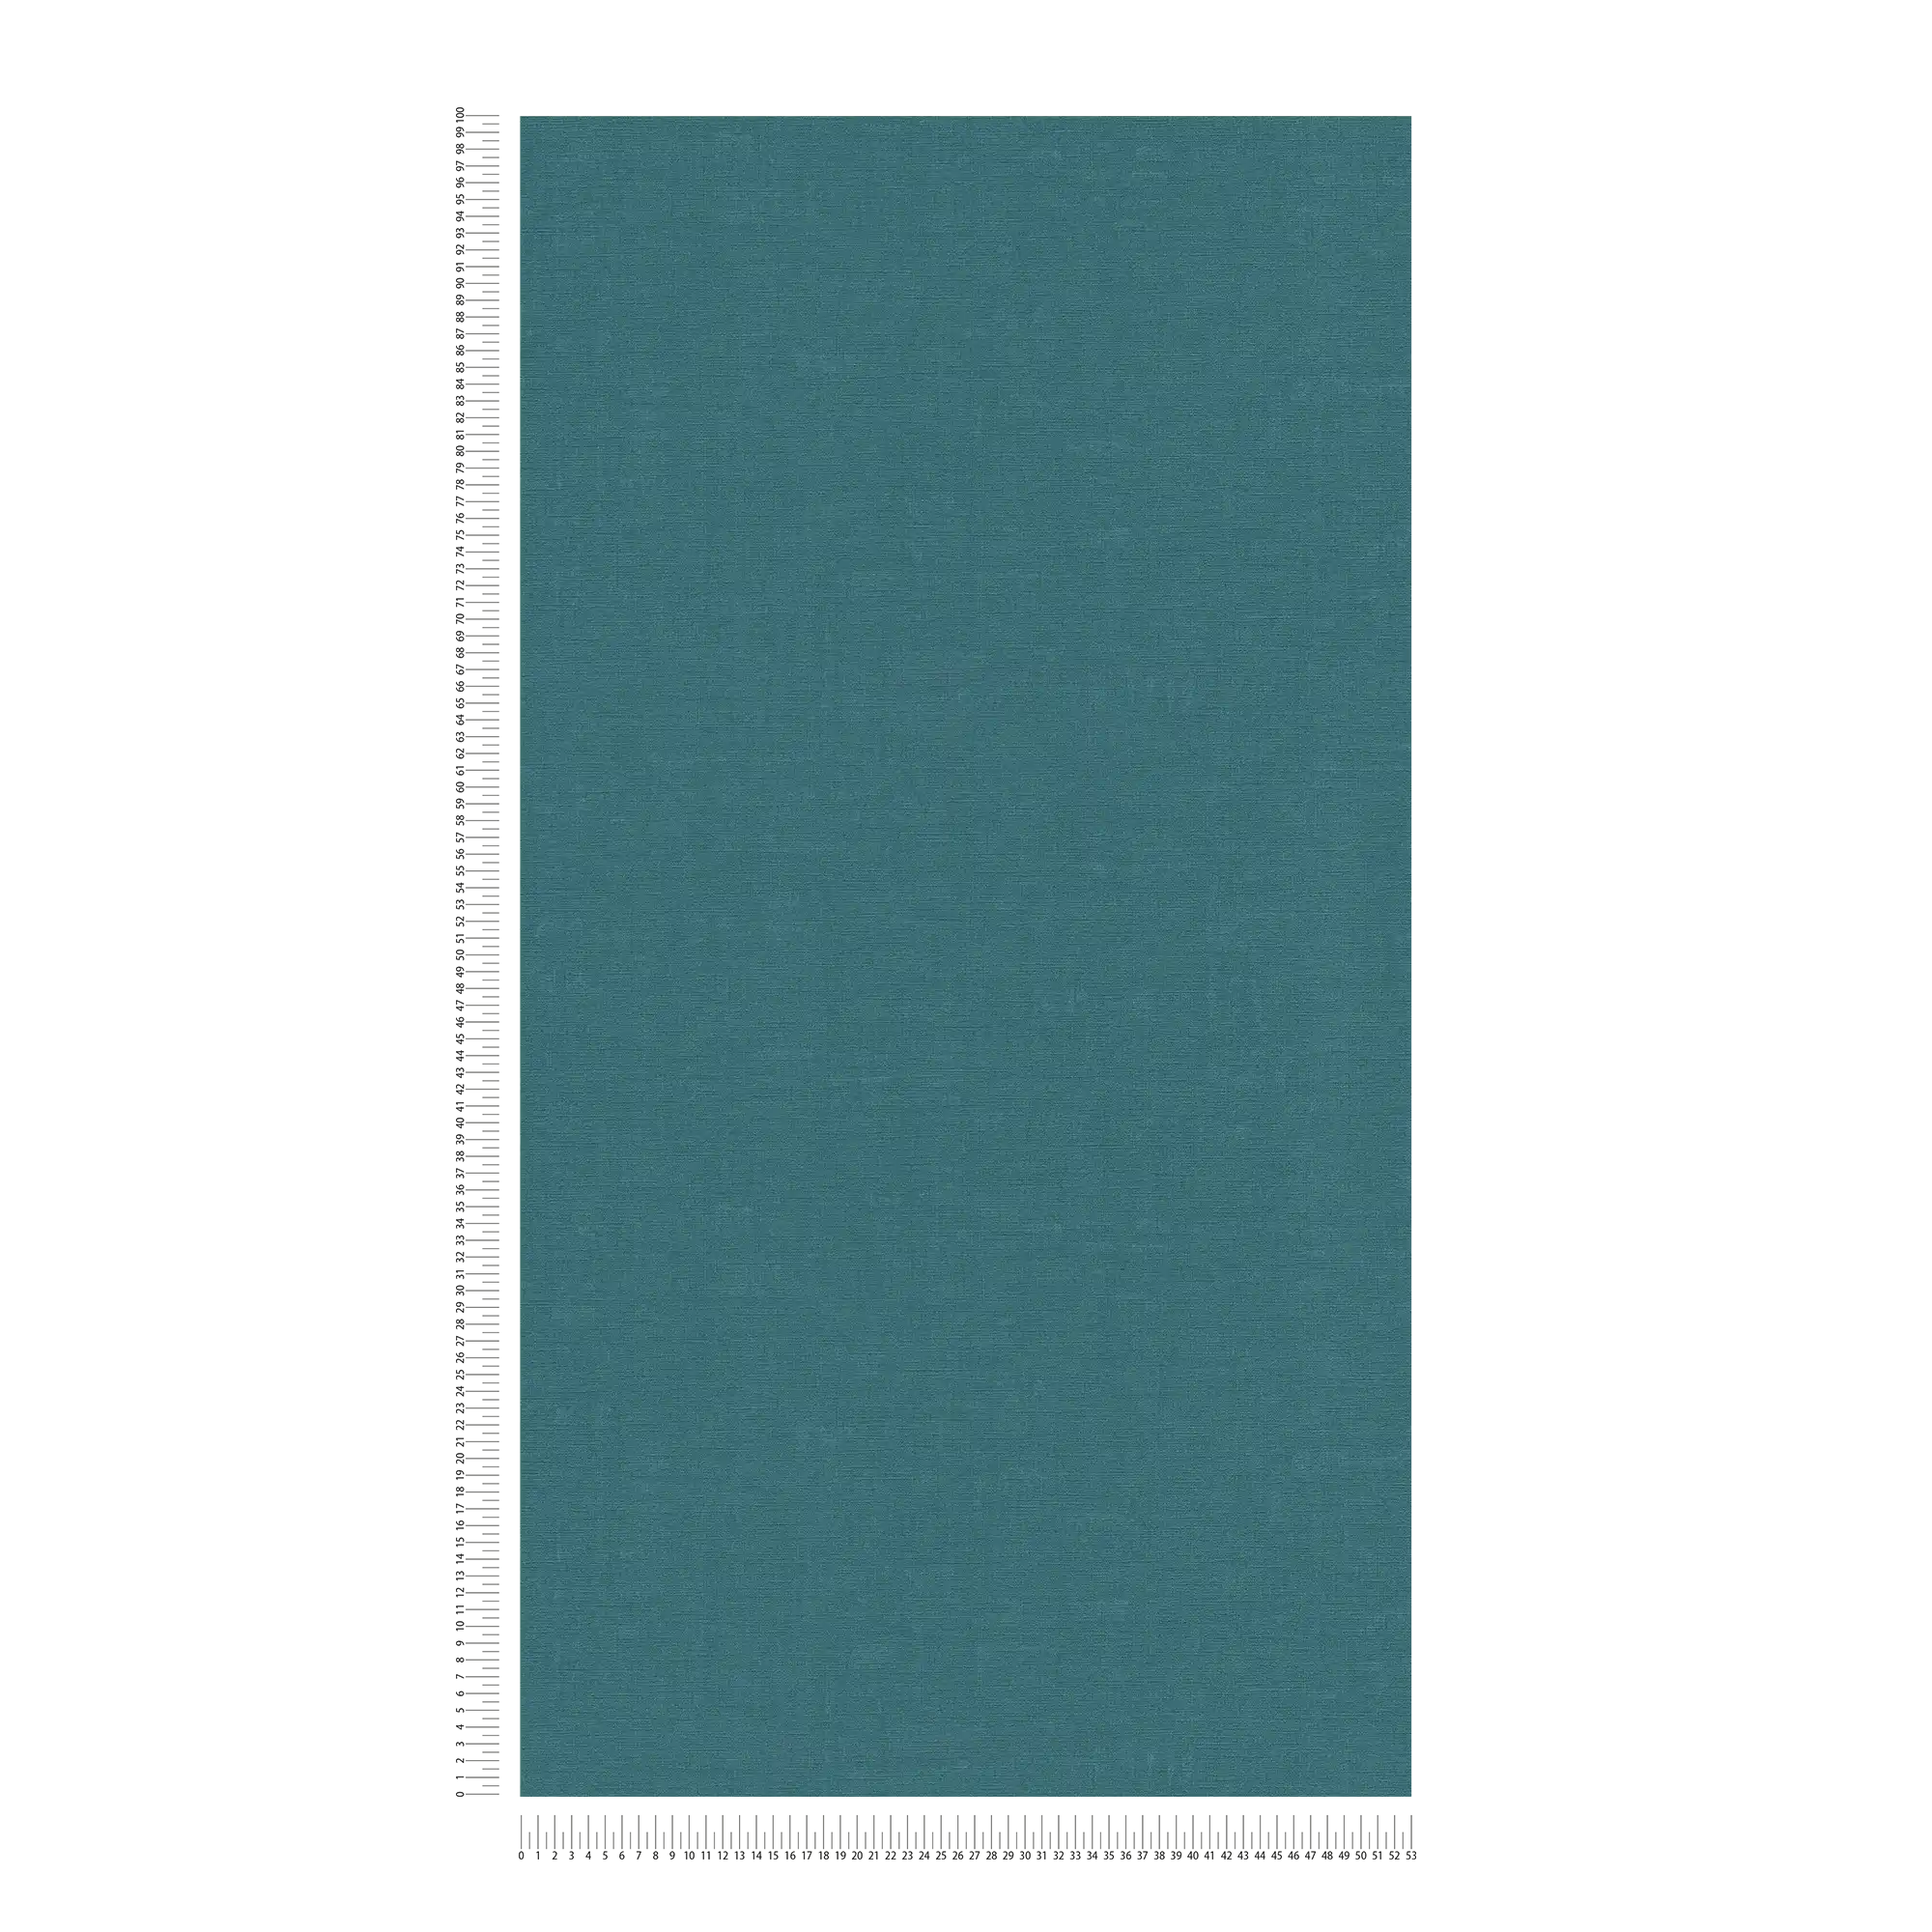             Papier peint intissé uni effet chiné - bleu, vert
        